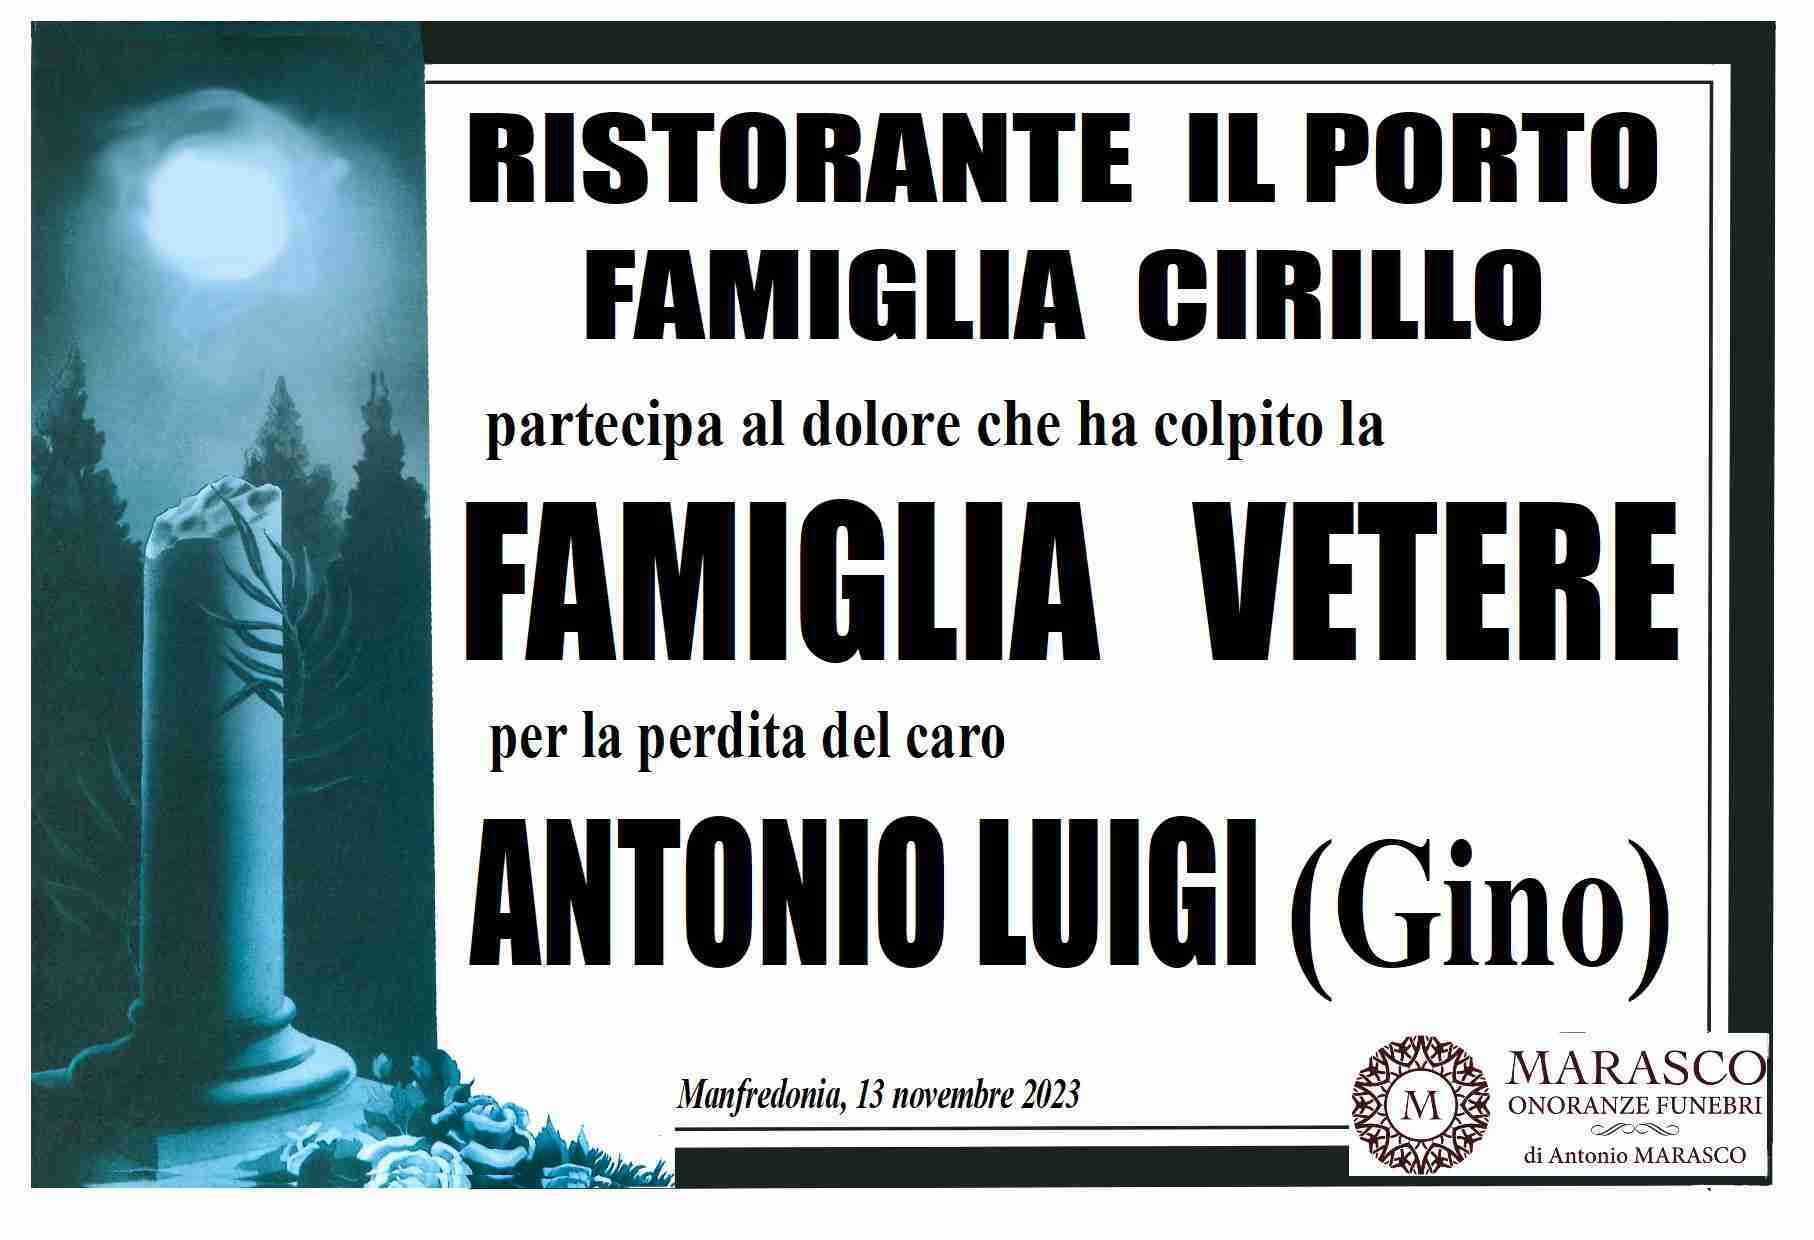 Antonio Luigi (Gino) Vetere